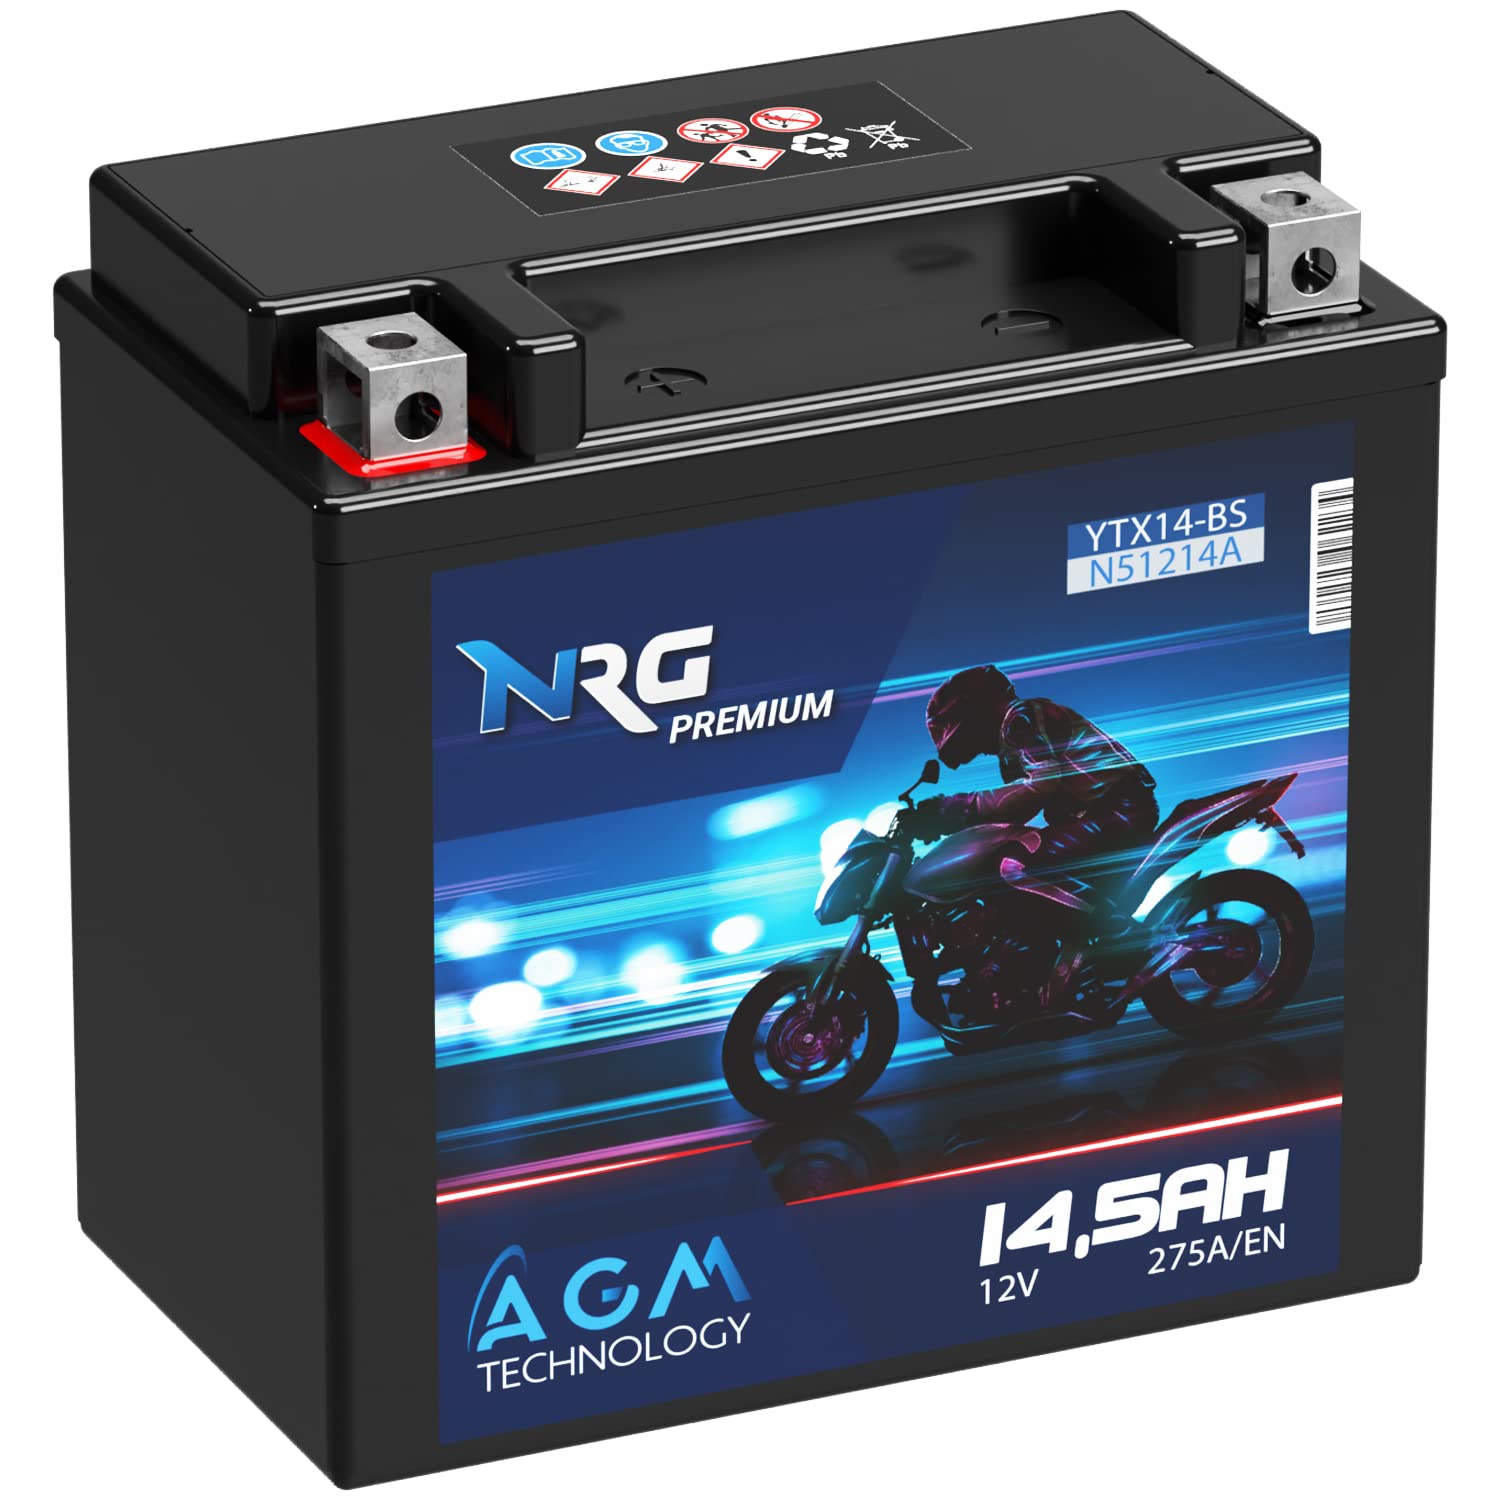 NRG Premium YTX14-BS AGM Motorradbatterie 14,5Ah 12V 275A/EN Batterie 51214 YTX14-4 CTX14-BS GTX14-BS auslaufsicher wartungsfrei ersetzt 14Ah von NRG PREMIUM